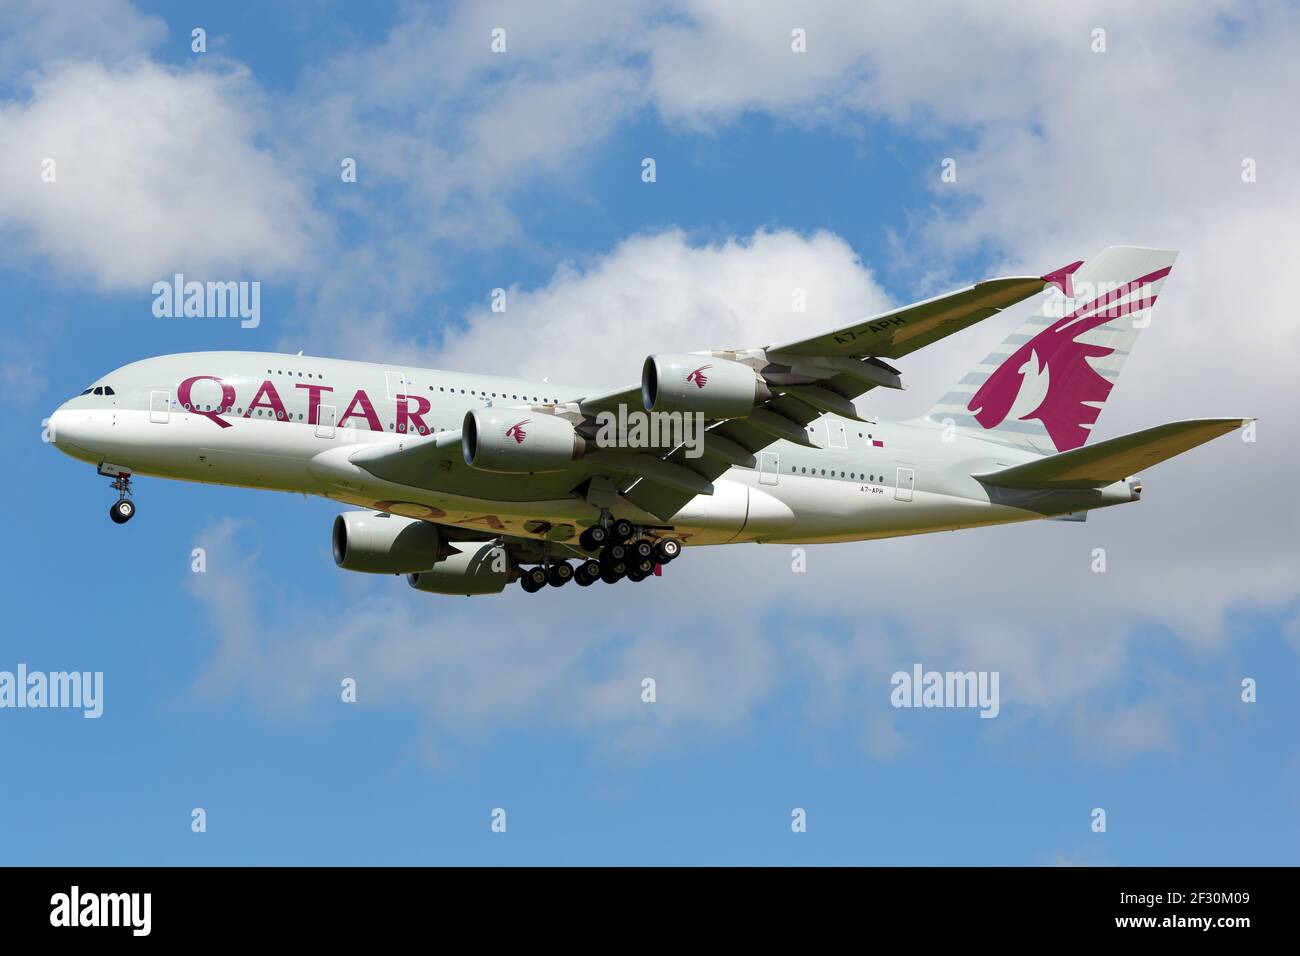 London, United Kingdom - August 17, 2018: Qatar Airways Airbus A380 airplane at London Heathrow airport (LHR) in the United Kingdom. Stock Photo